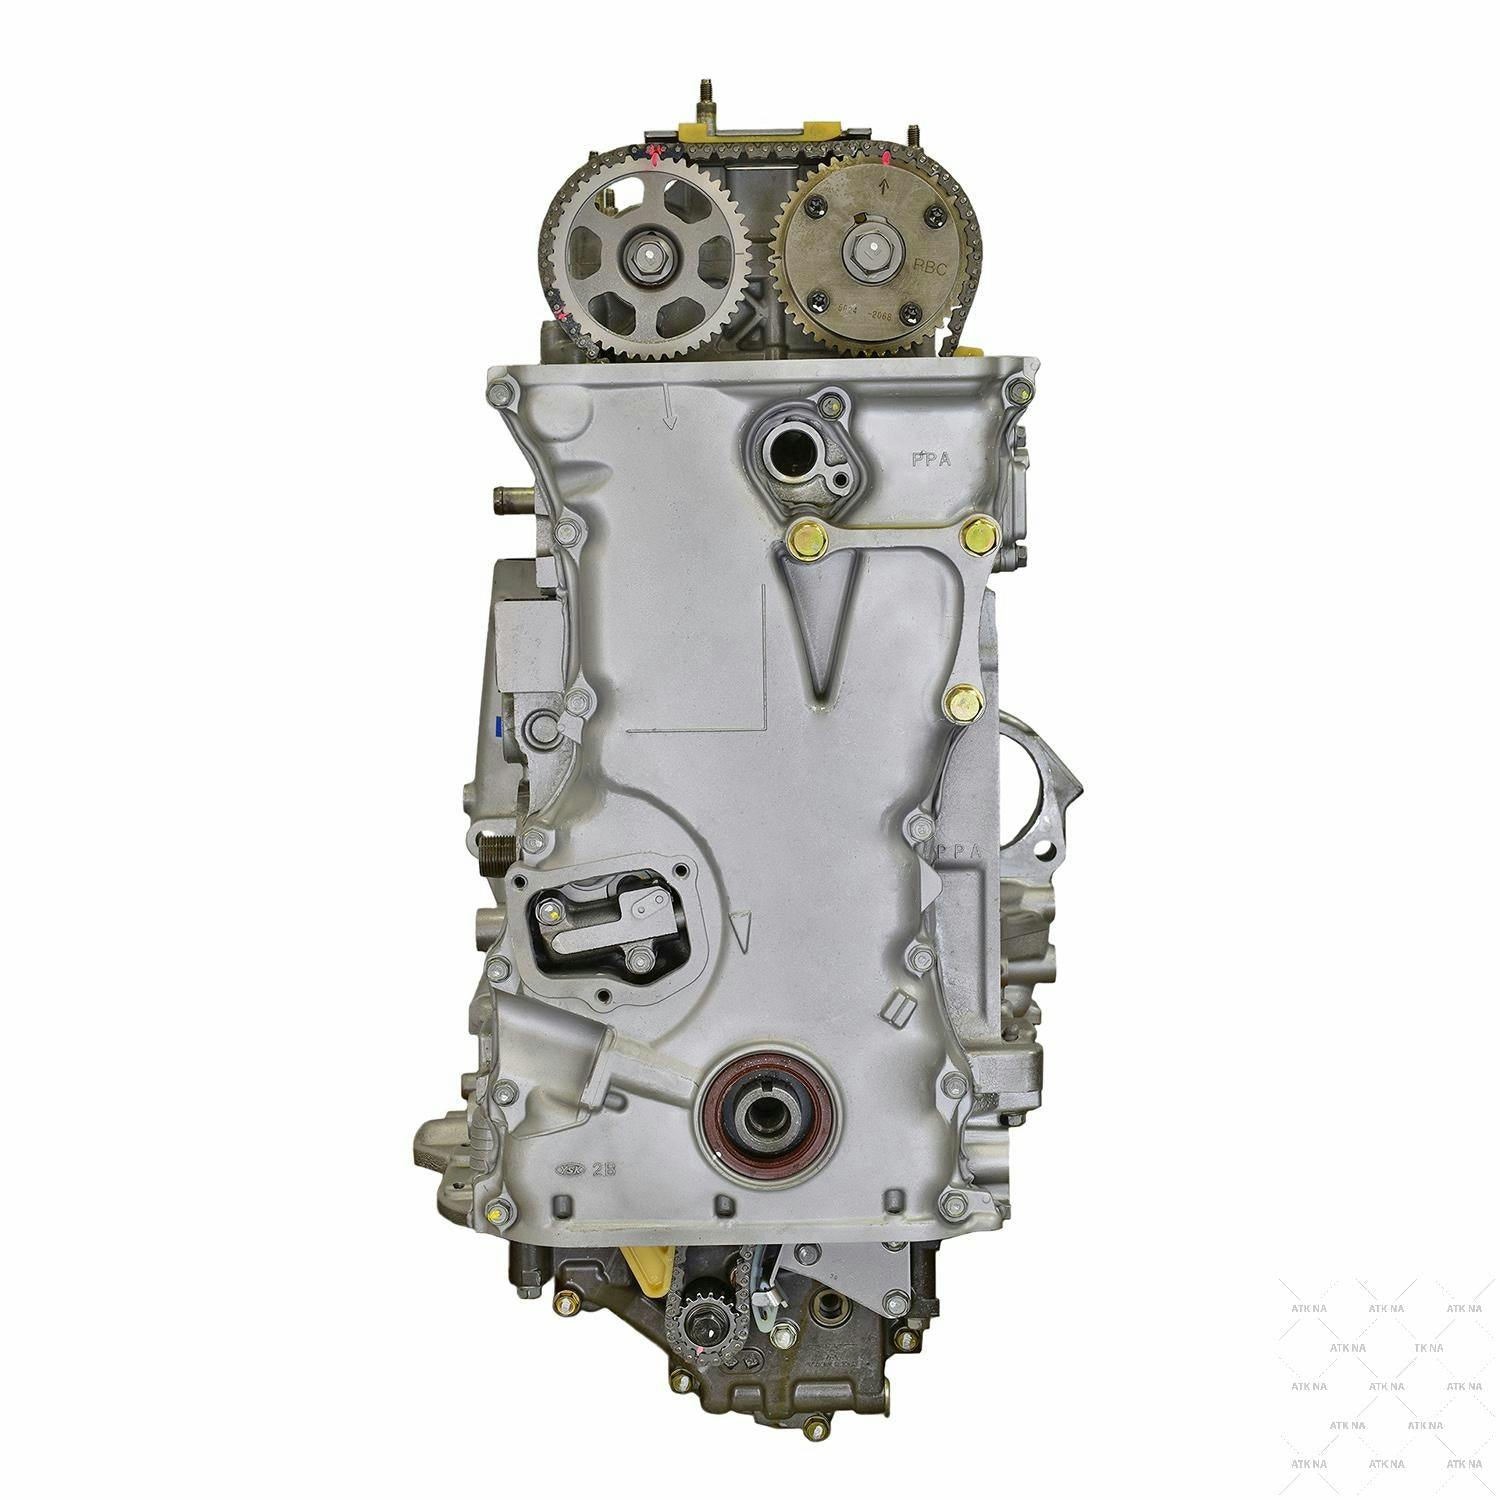 2.4L Inline-4 Engine for 2002-2006 Honda CR-V